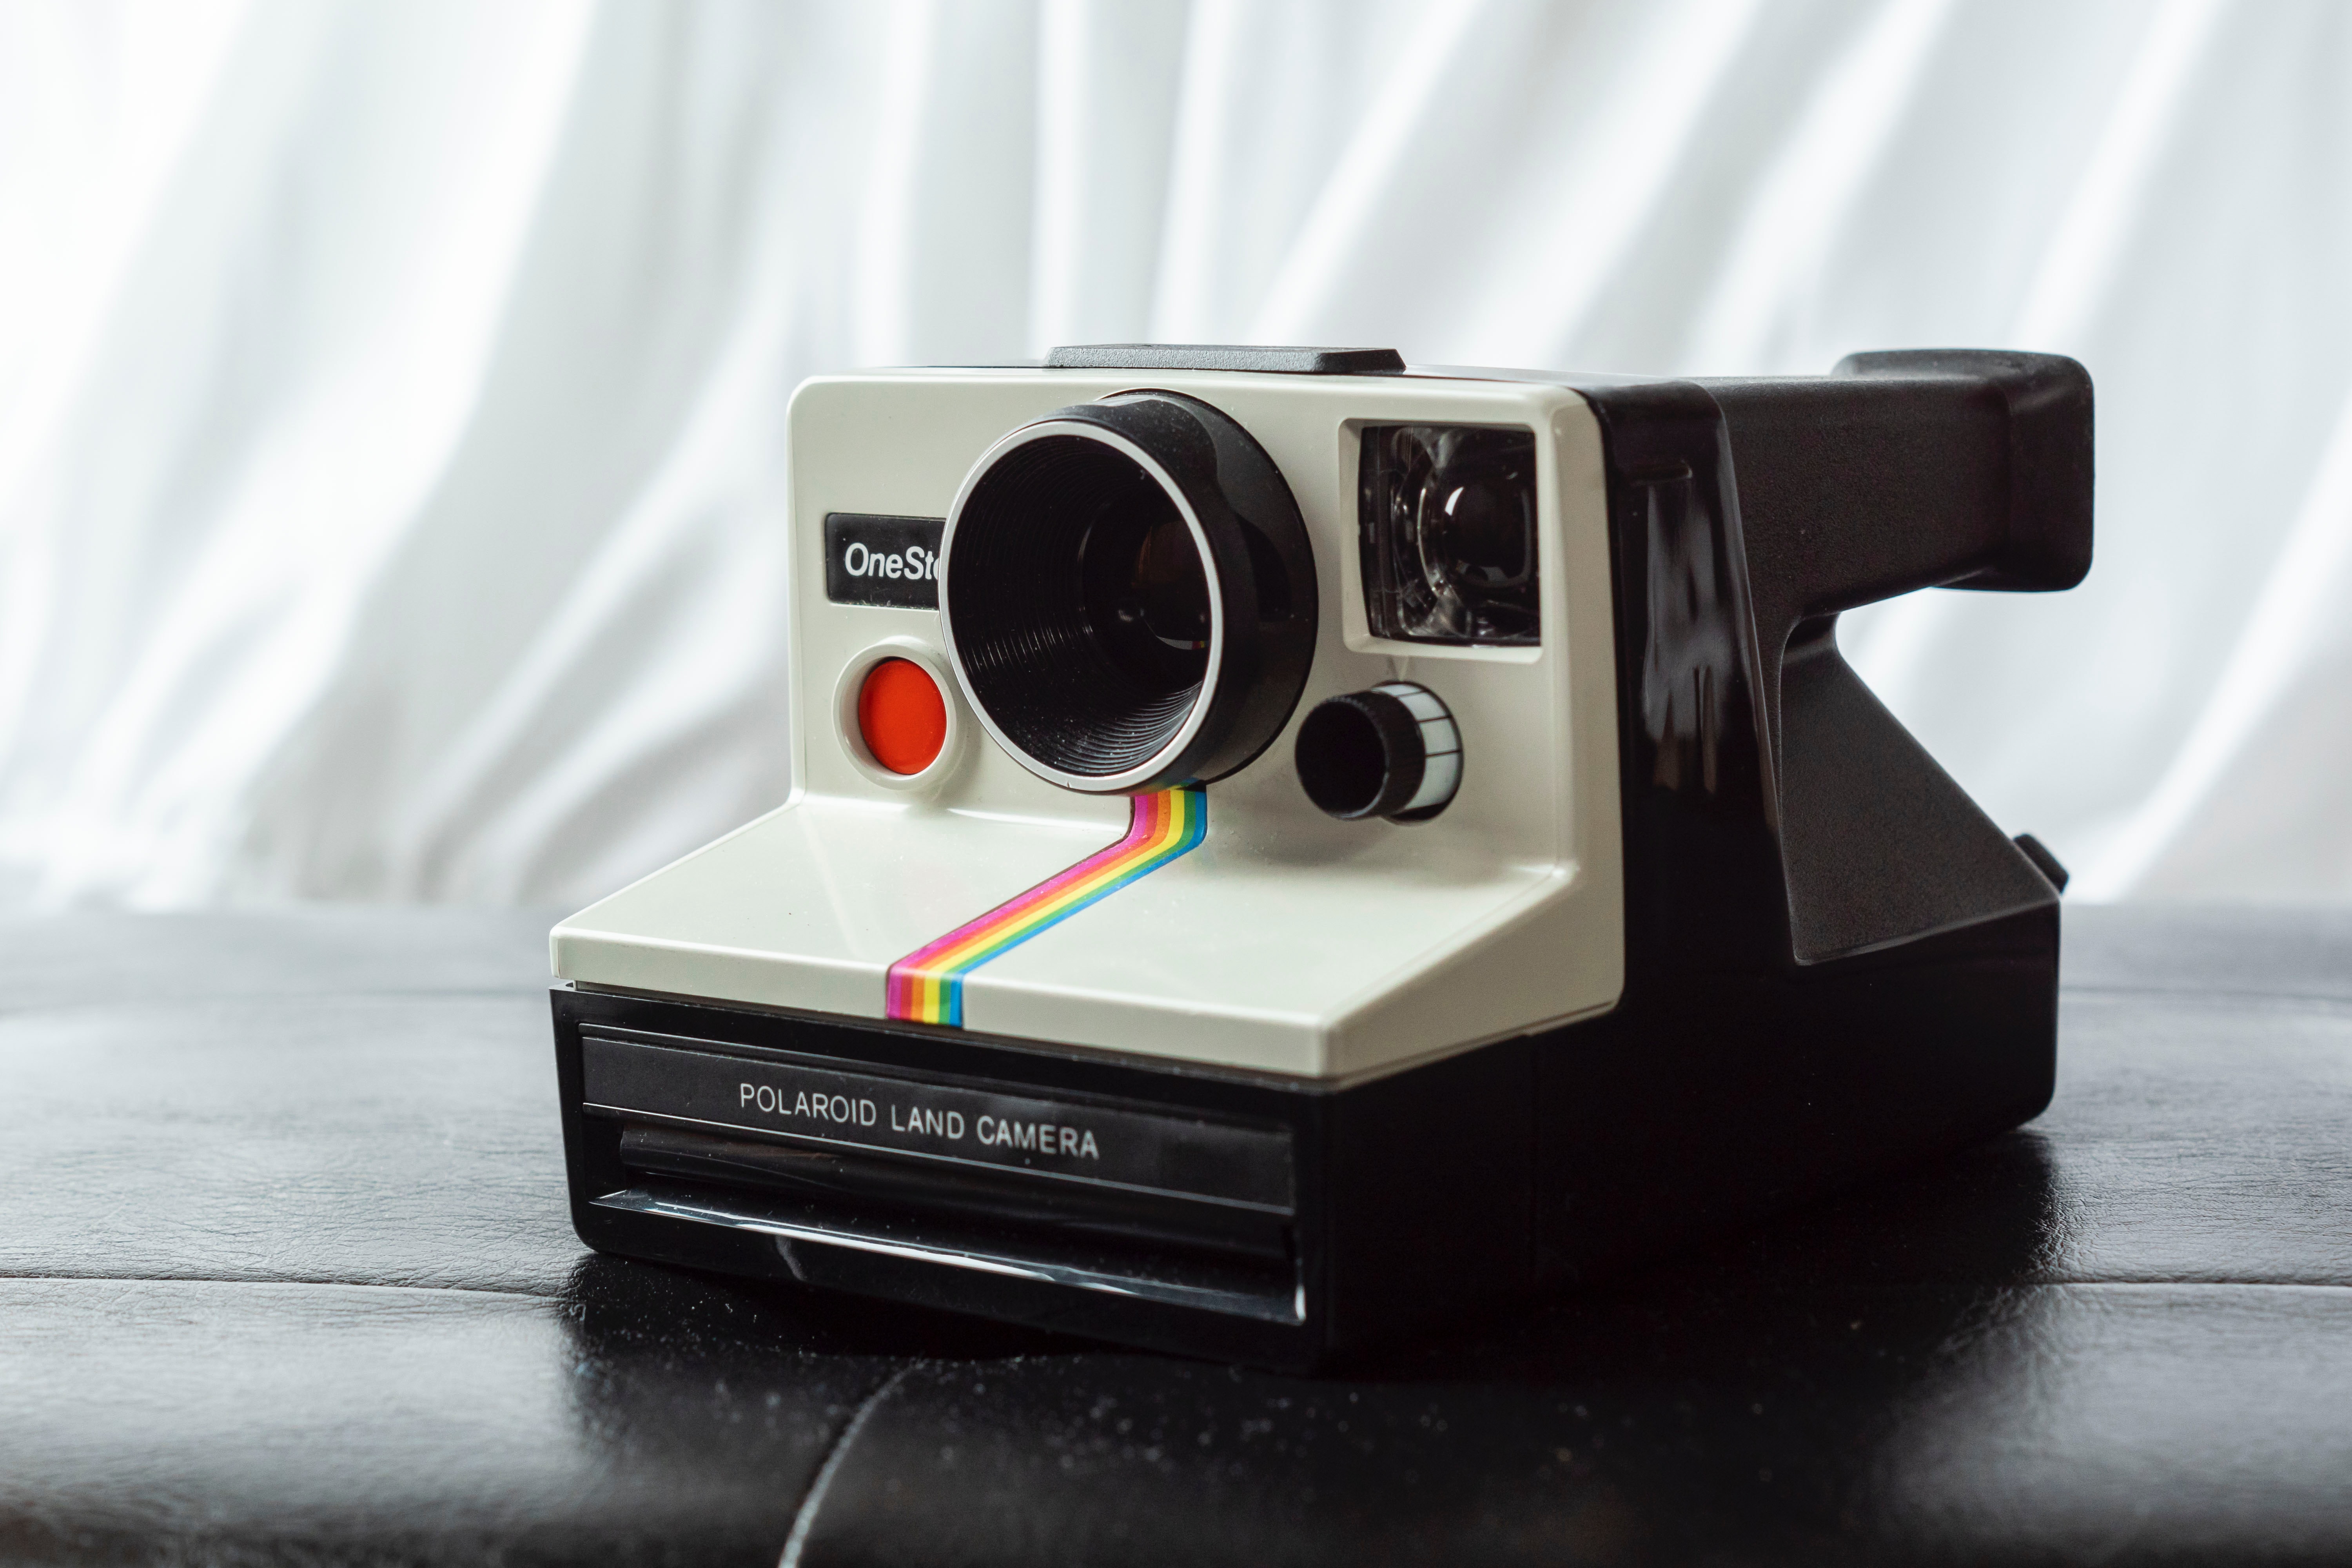 White and black Polaroid Land camera